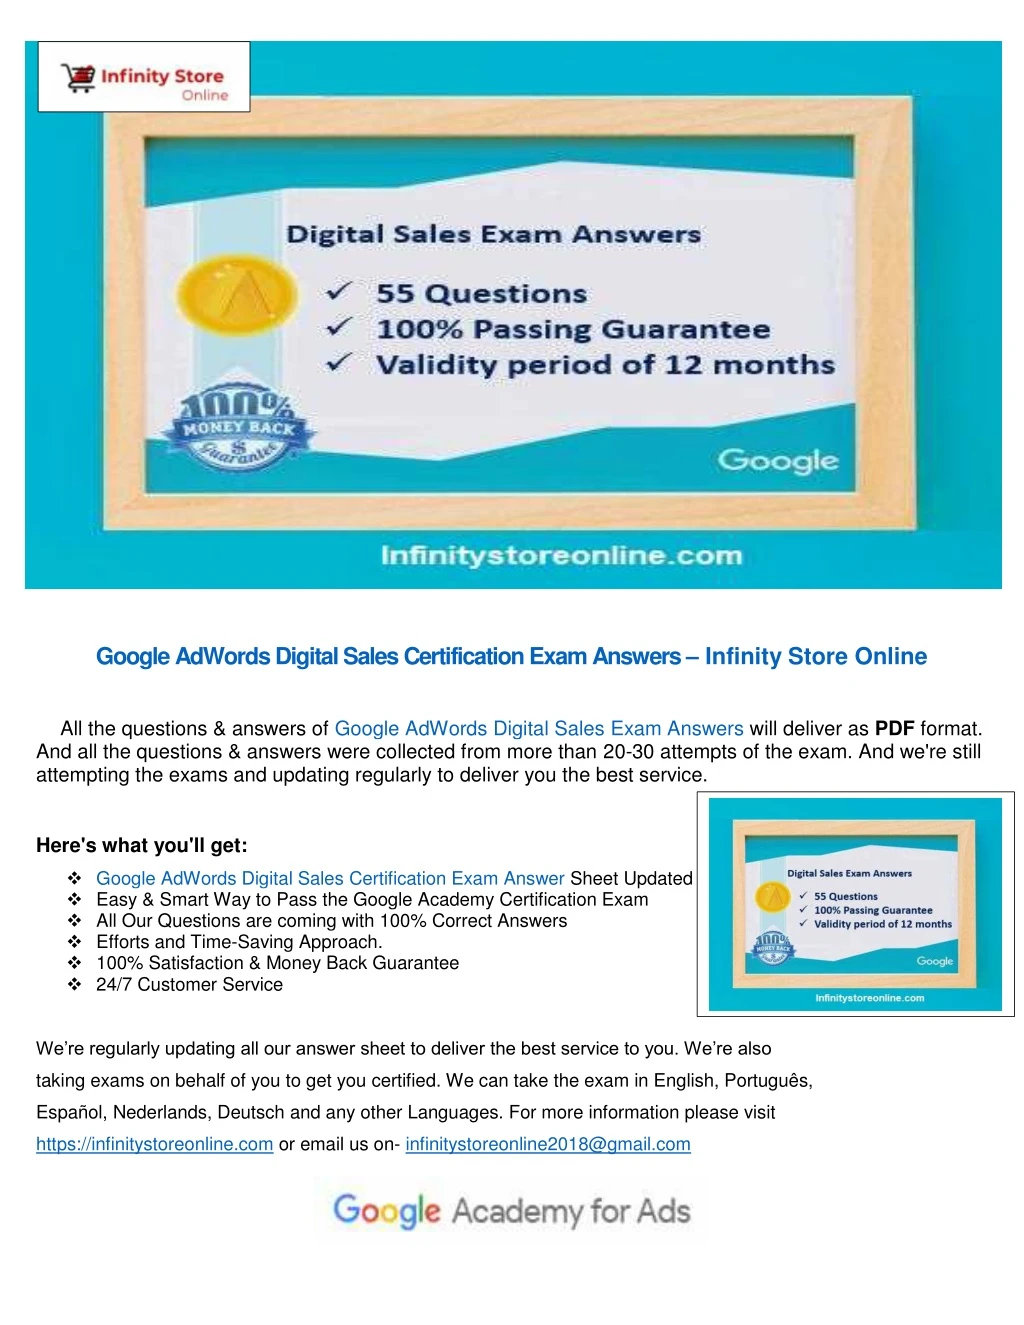 google adwords digital sales certification exam